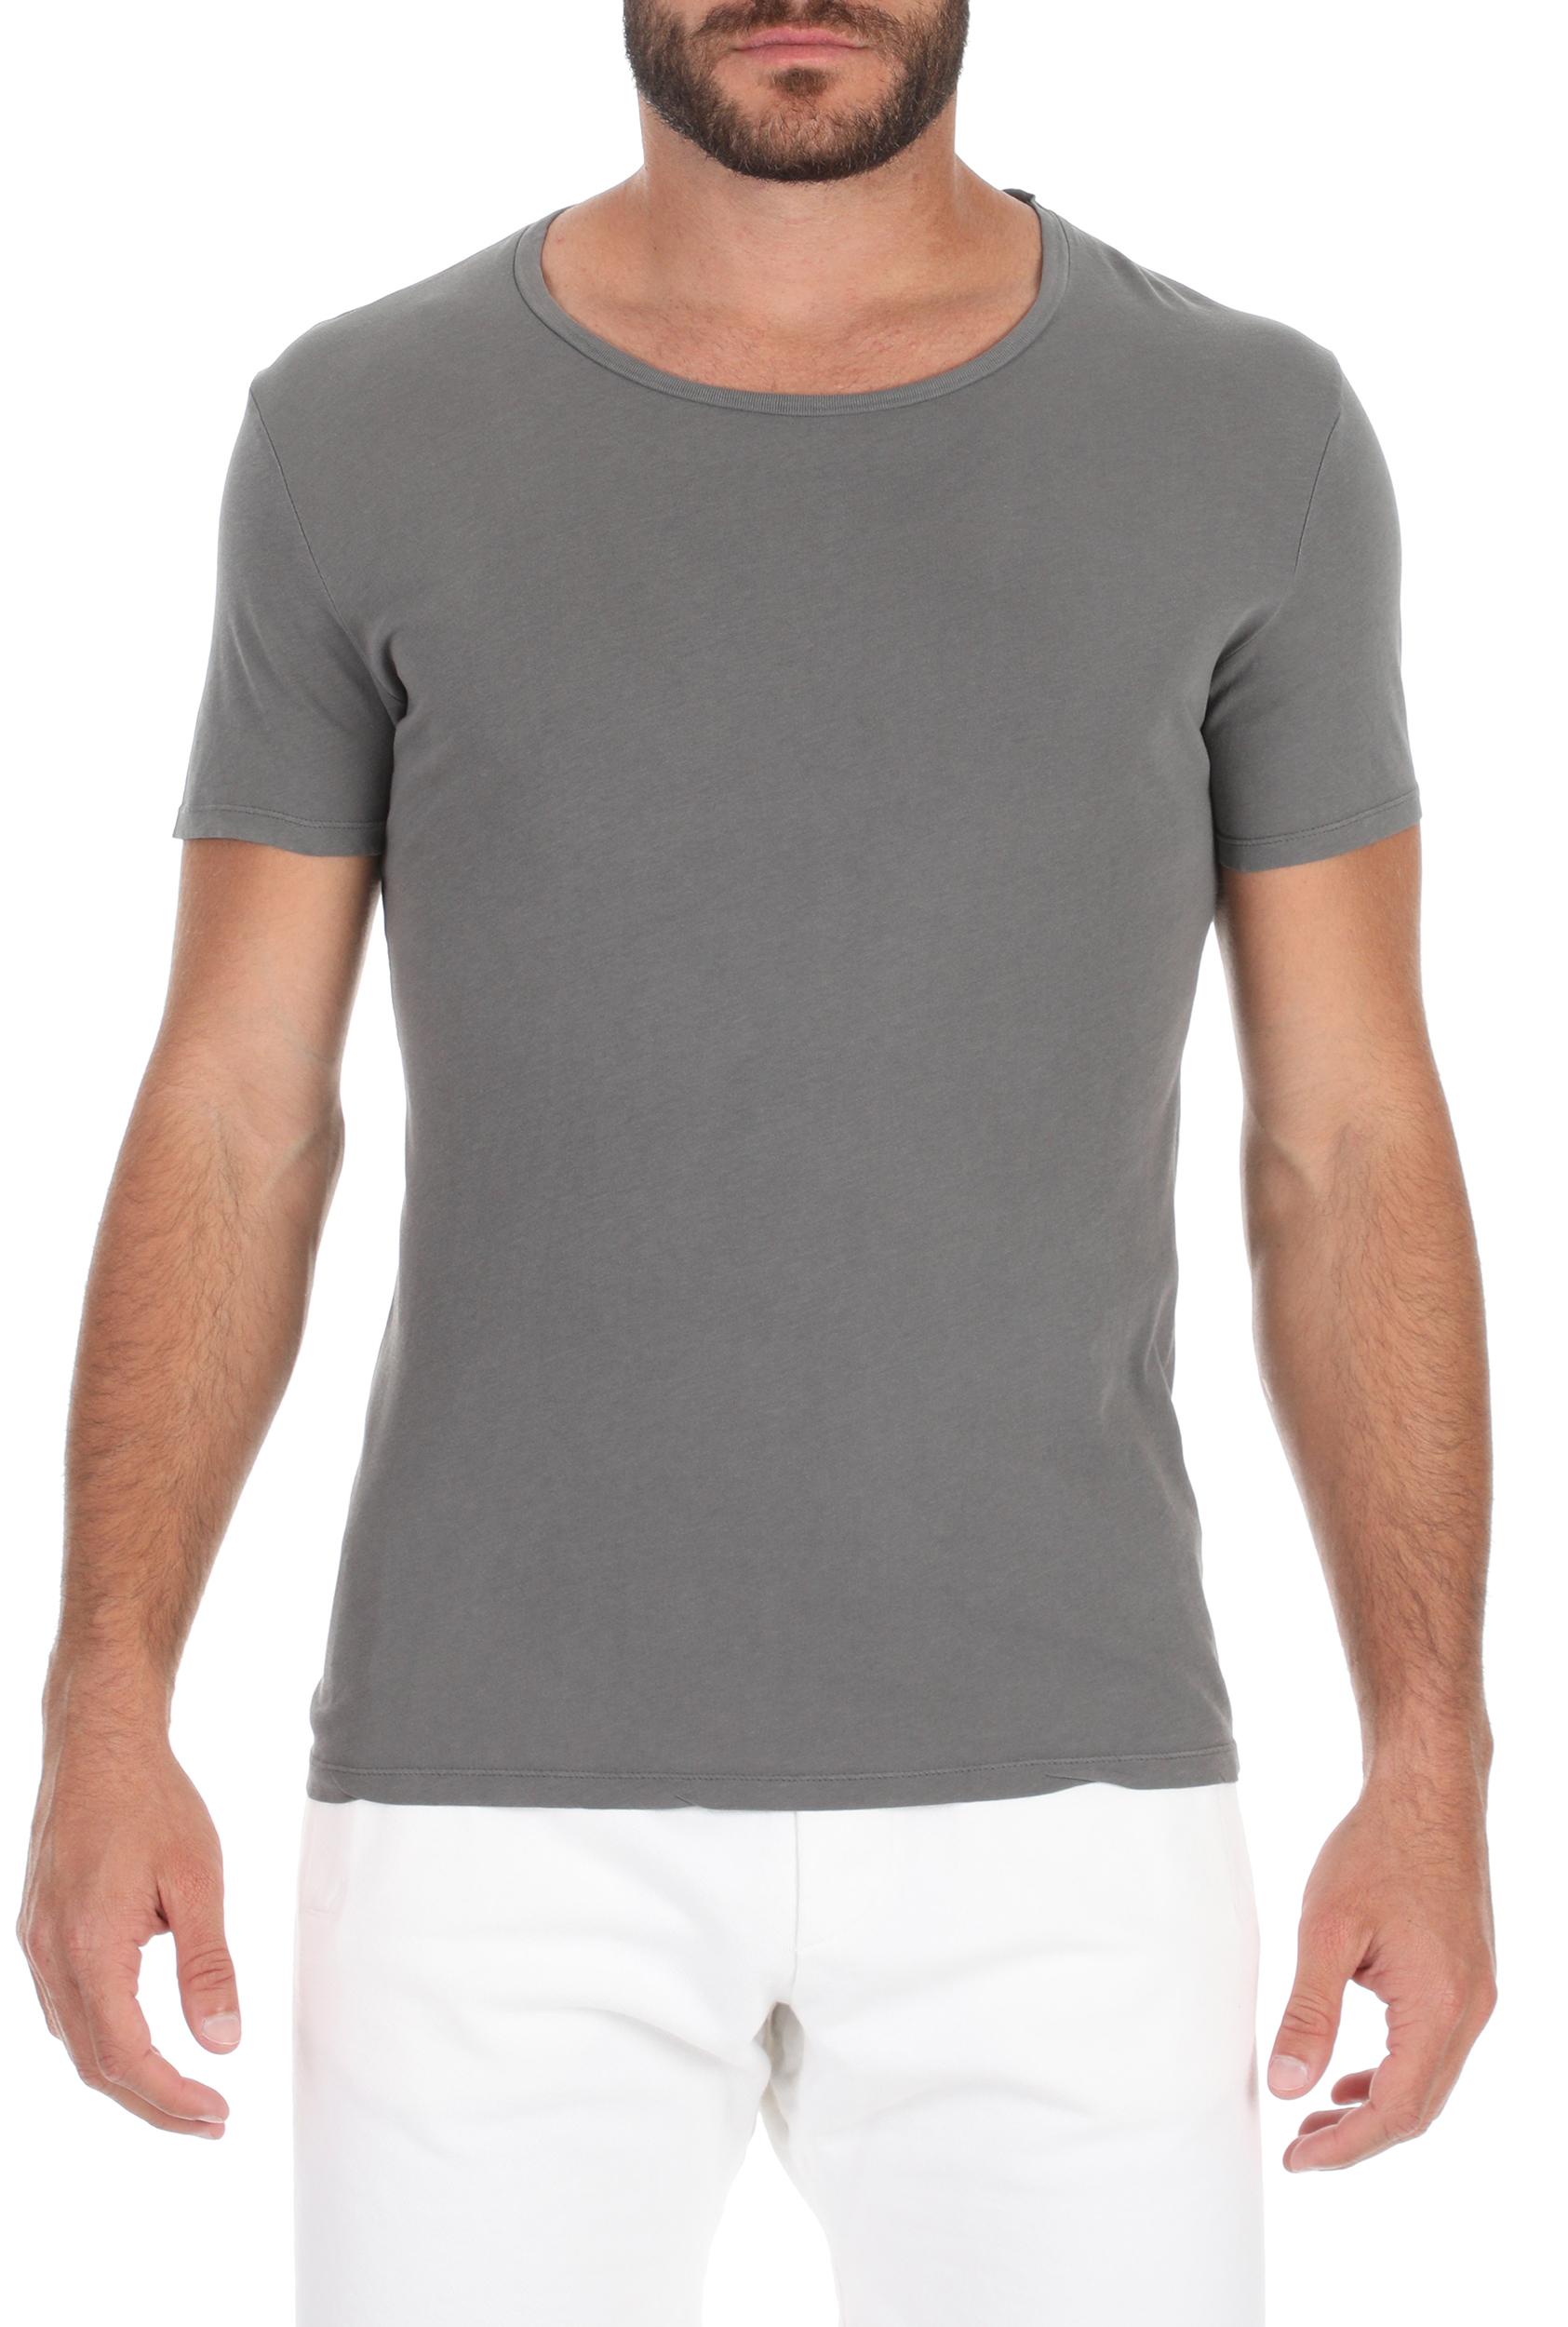 AMERICAN VINTAGE - Ανδρικό t-shirt AMERICAN VINTAGE γκρι Ανδρικά/Ρούχα/Μπλούζες/Κοντομάνικες